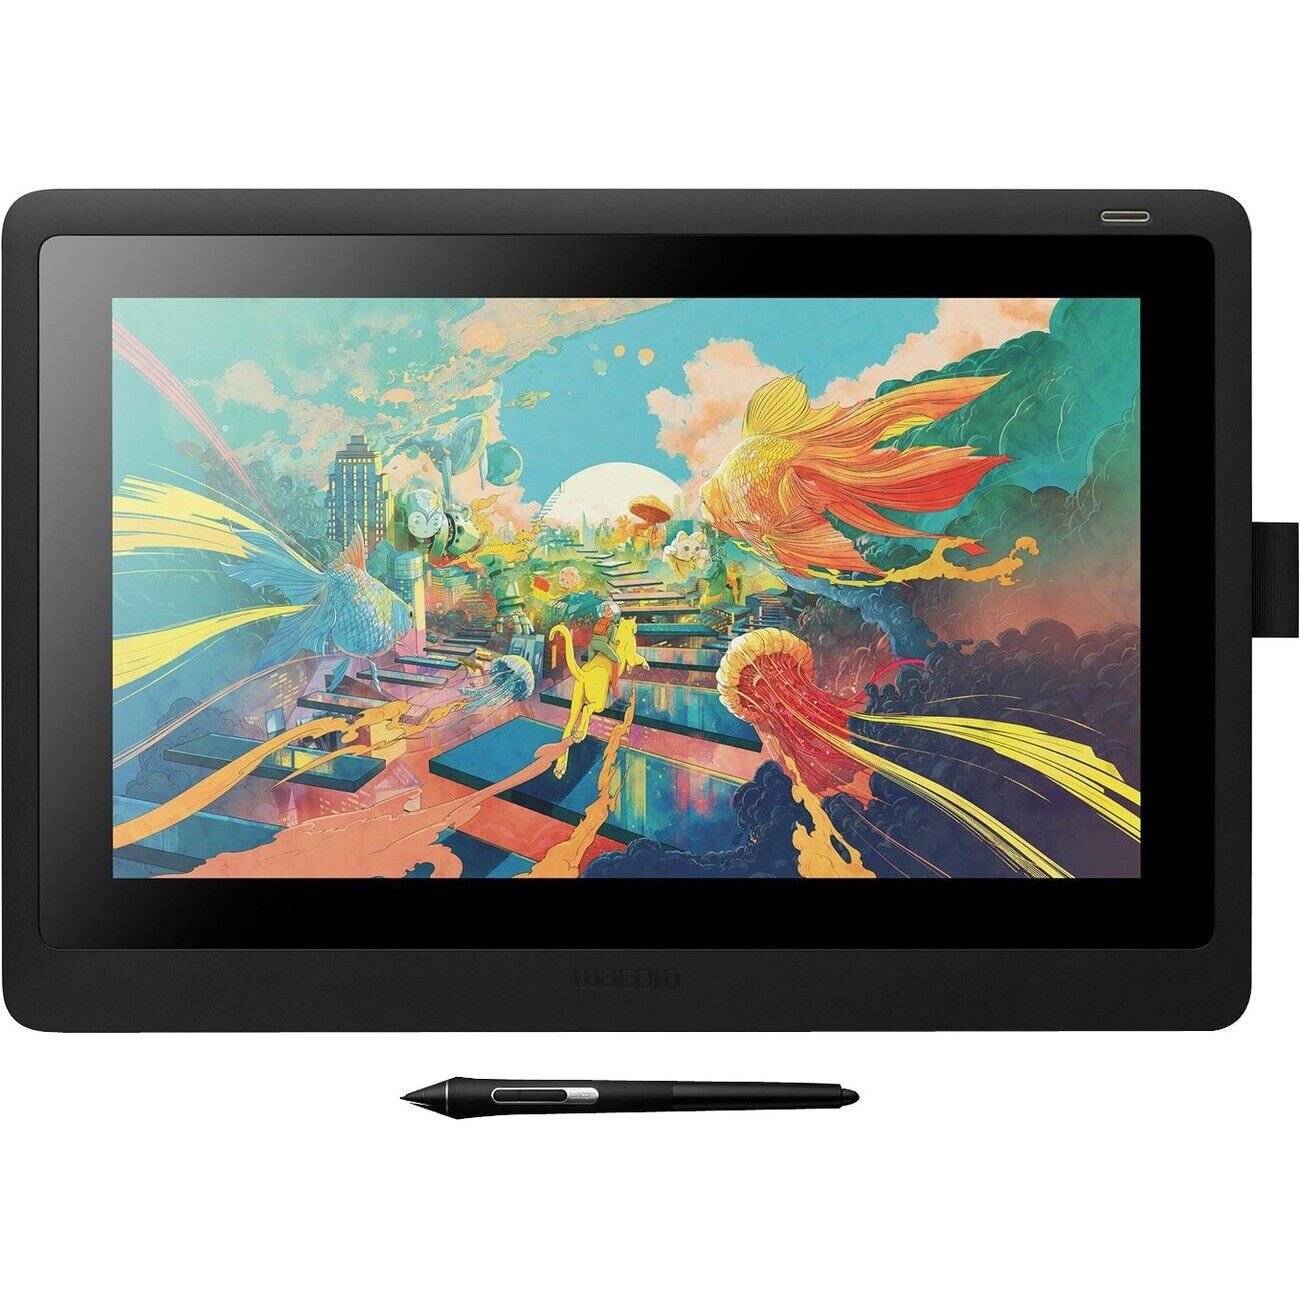 Wacom Cintiq 16 Drawing Tablet with Full HD 15.4-Inch Display Screen, 8192